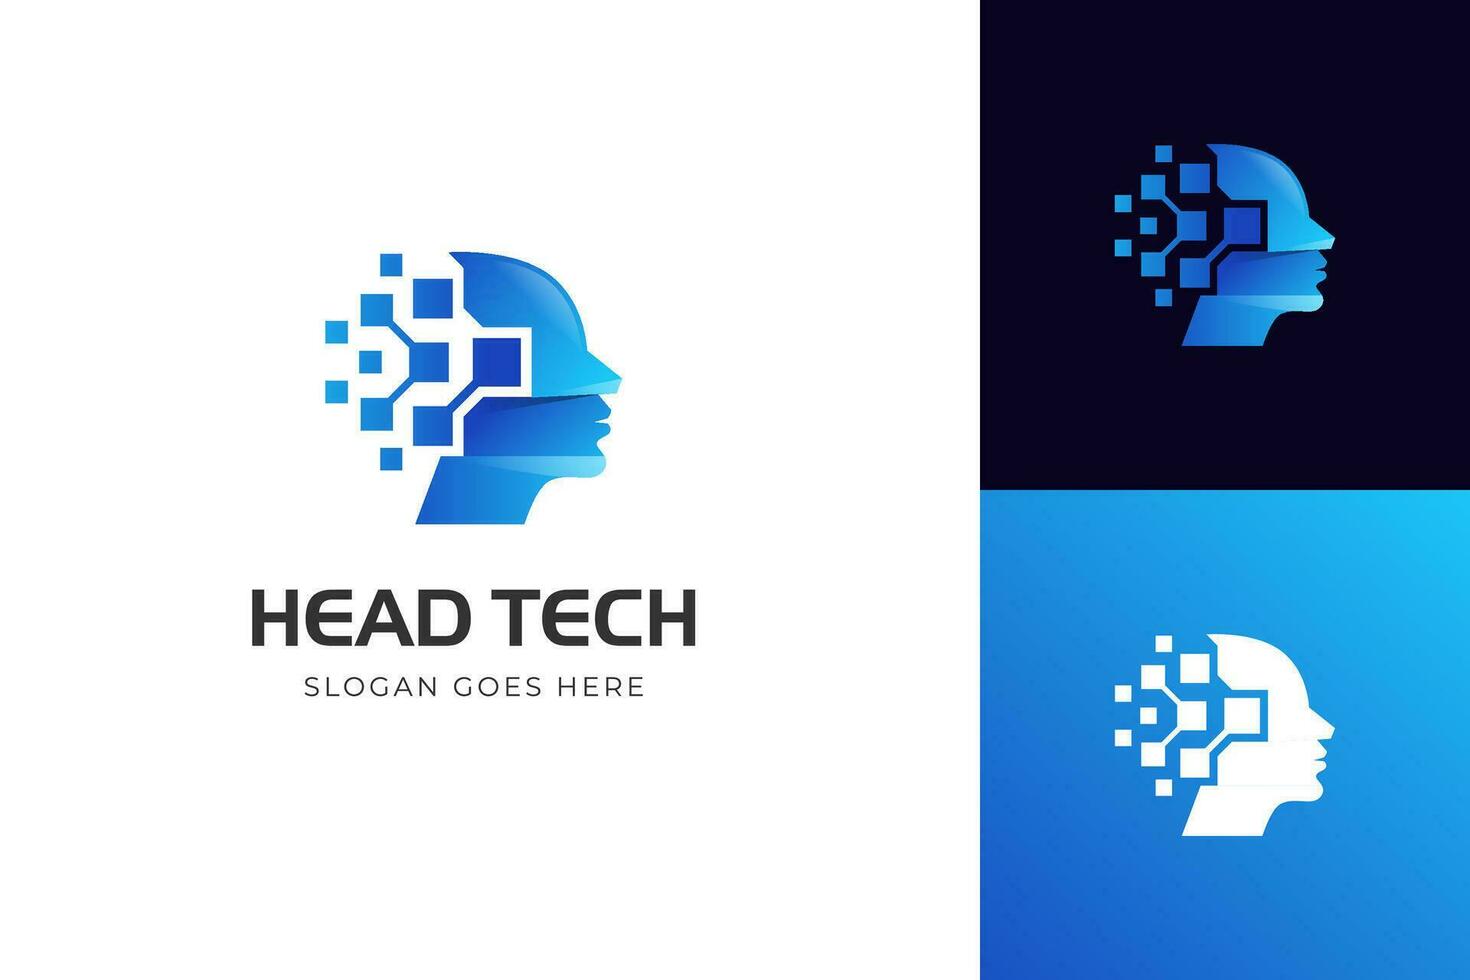 Human technology or human digital, head tech icon symbol, robot tech logo design vector